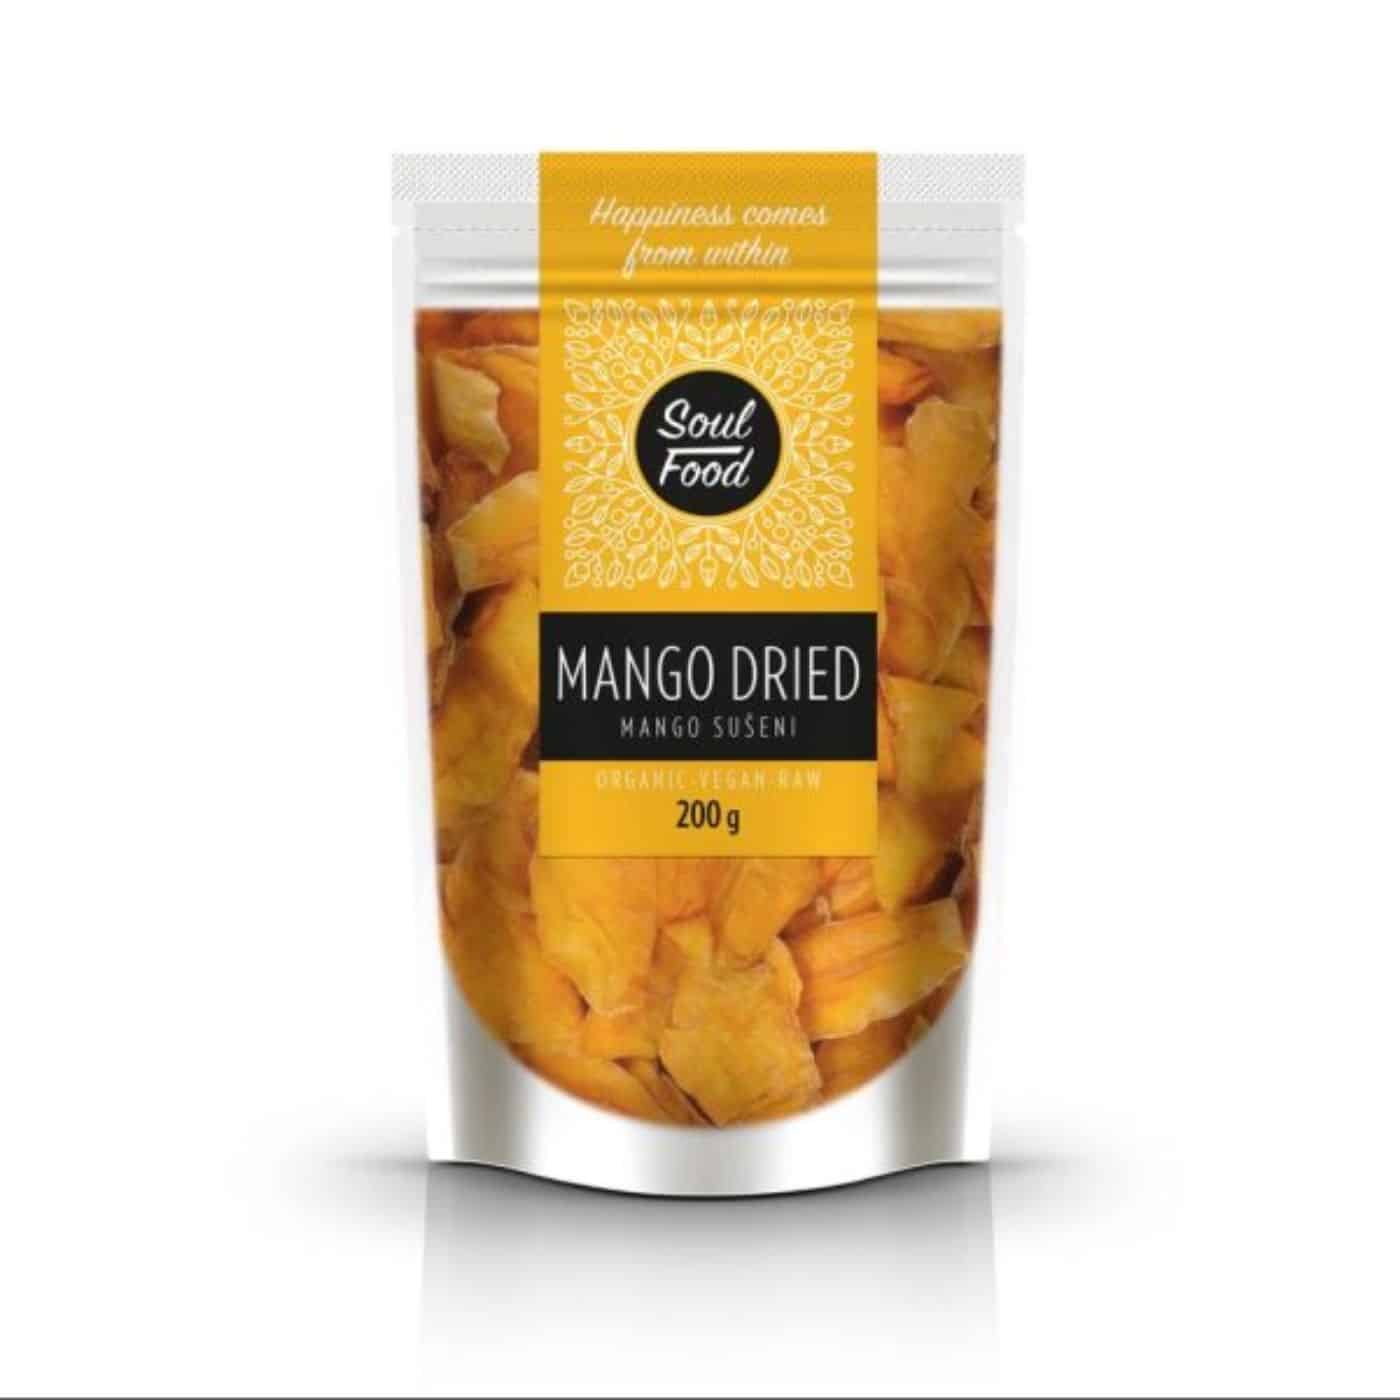 Mango sušeni Soul Food – 200 g